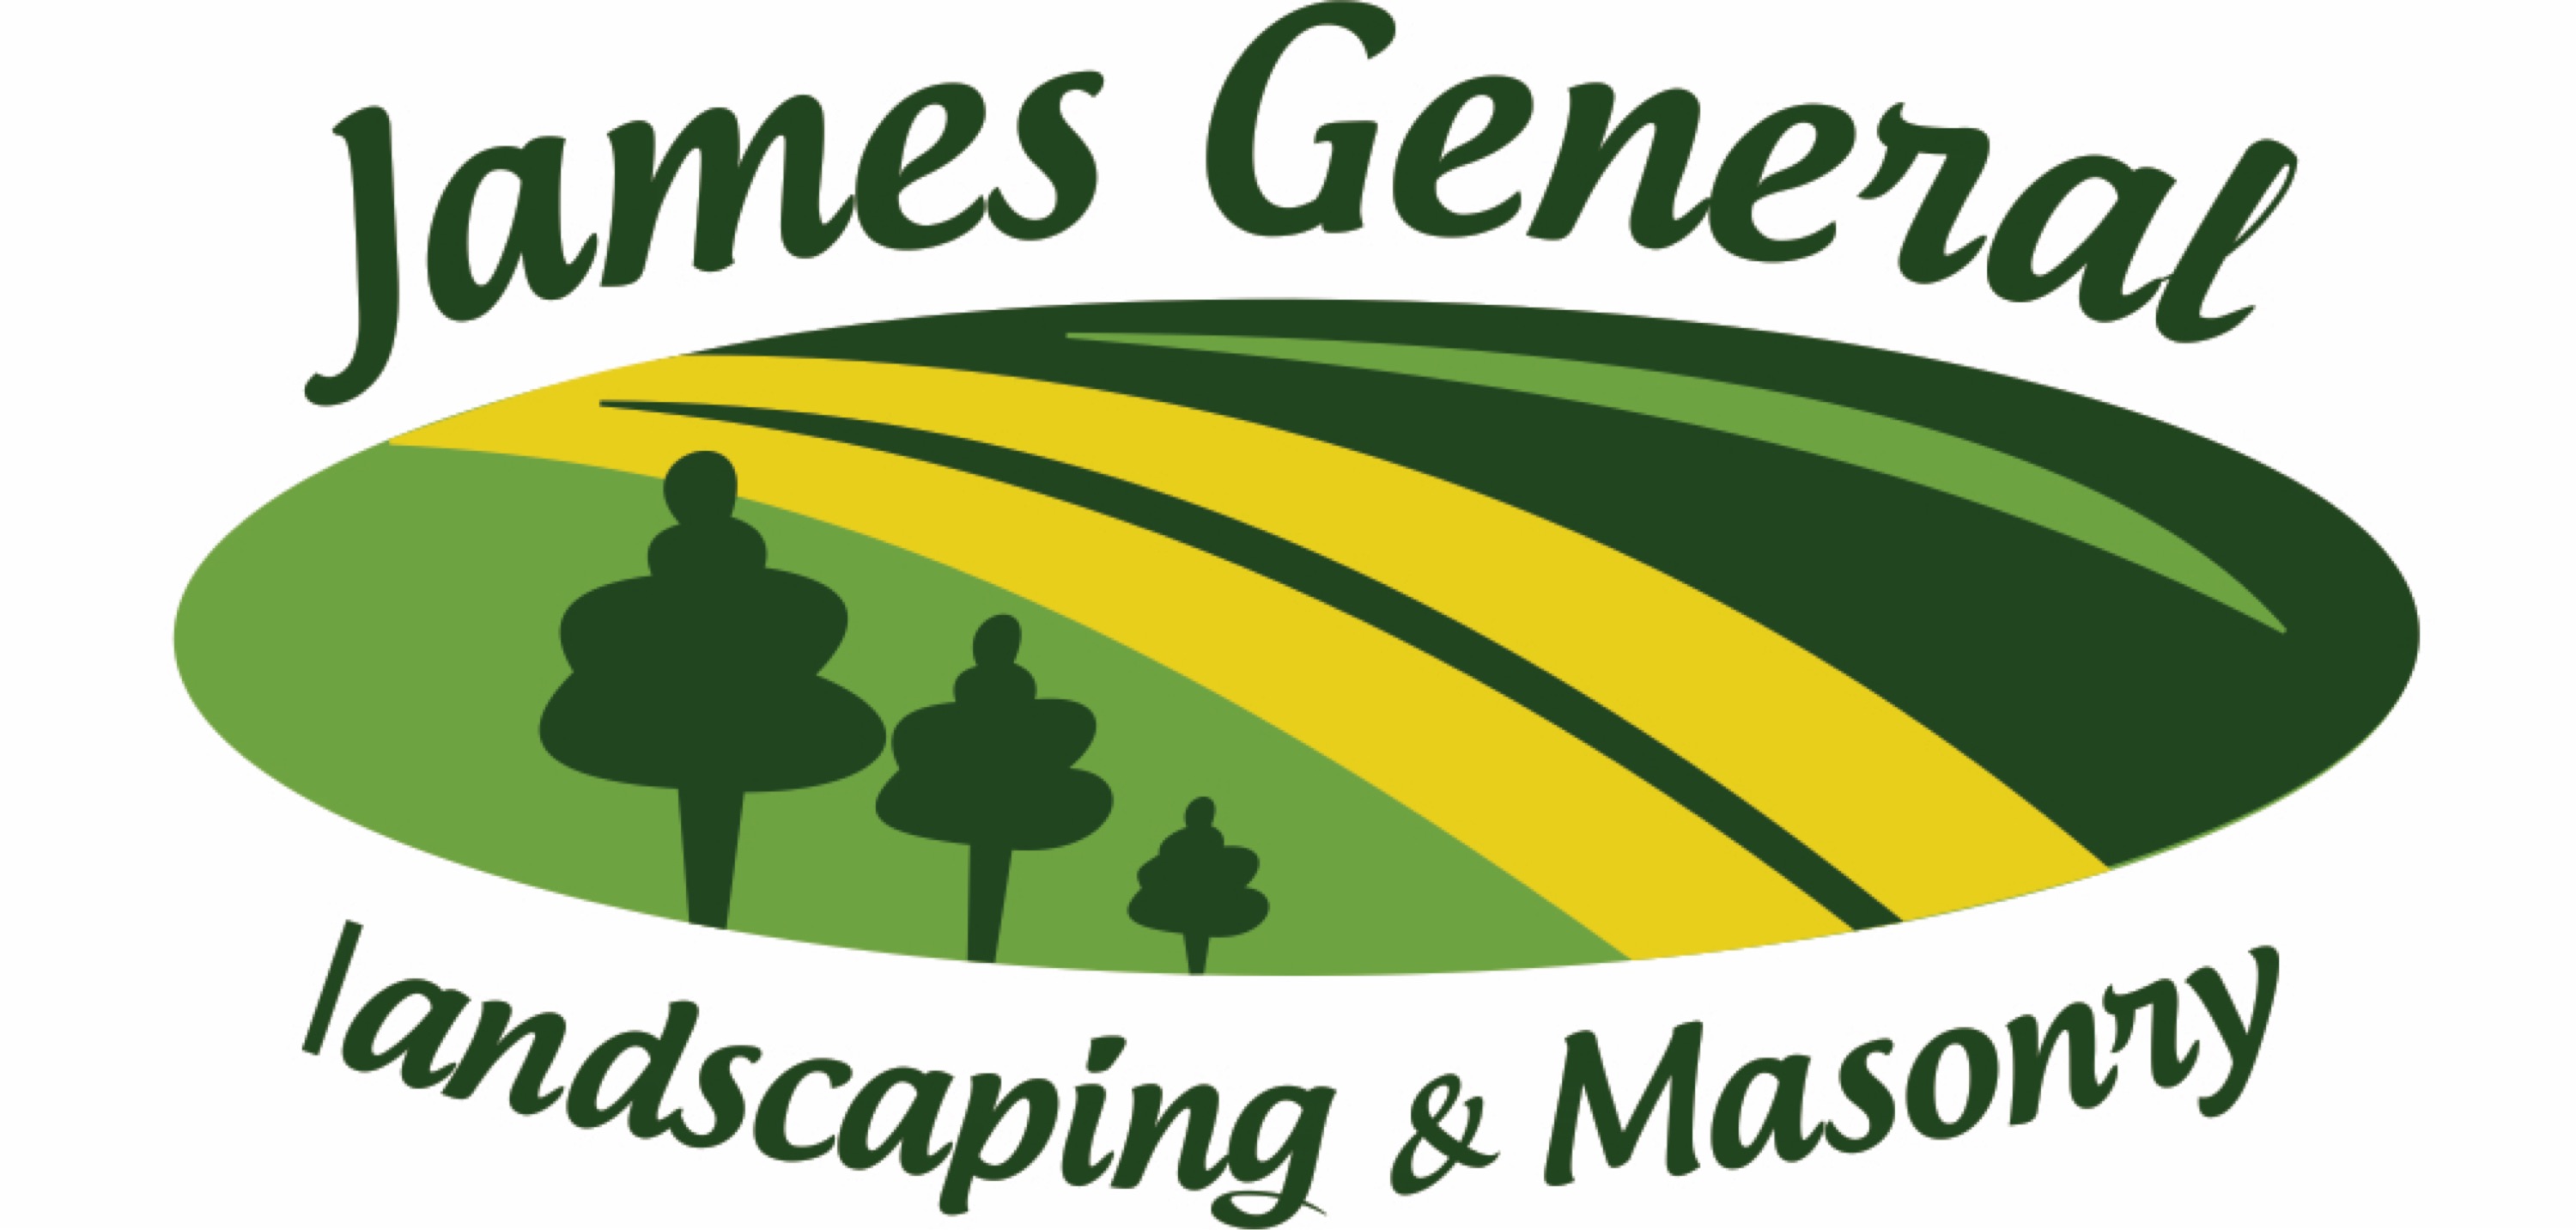 James General Landscape & Masonry, Inc. Logo